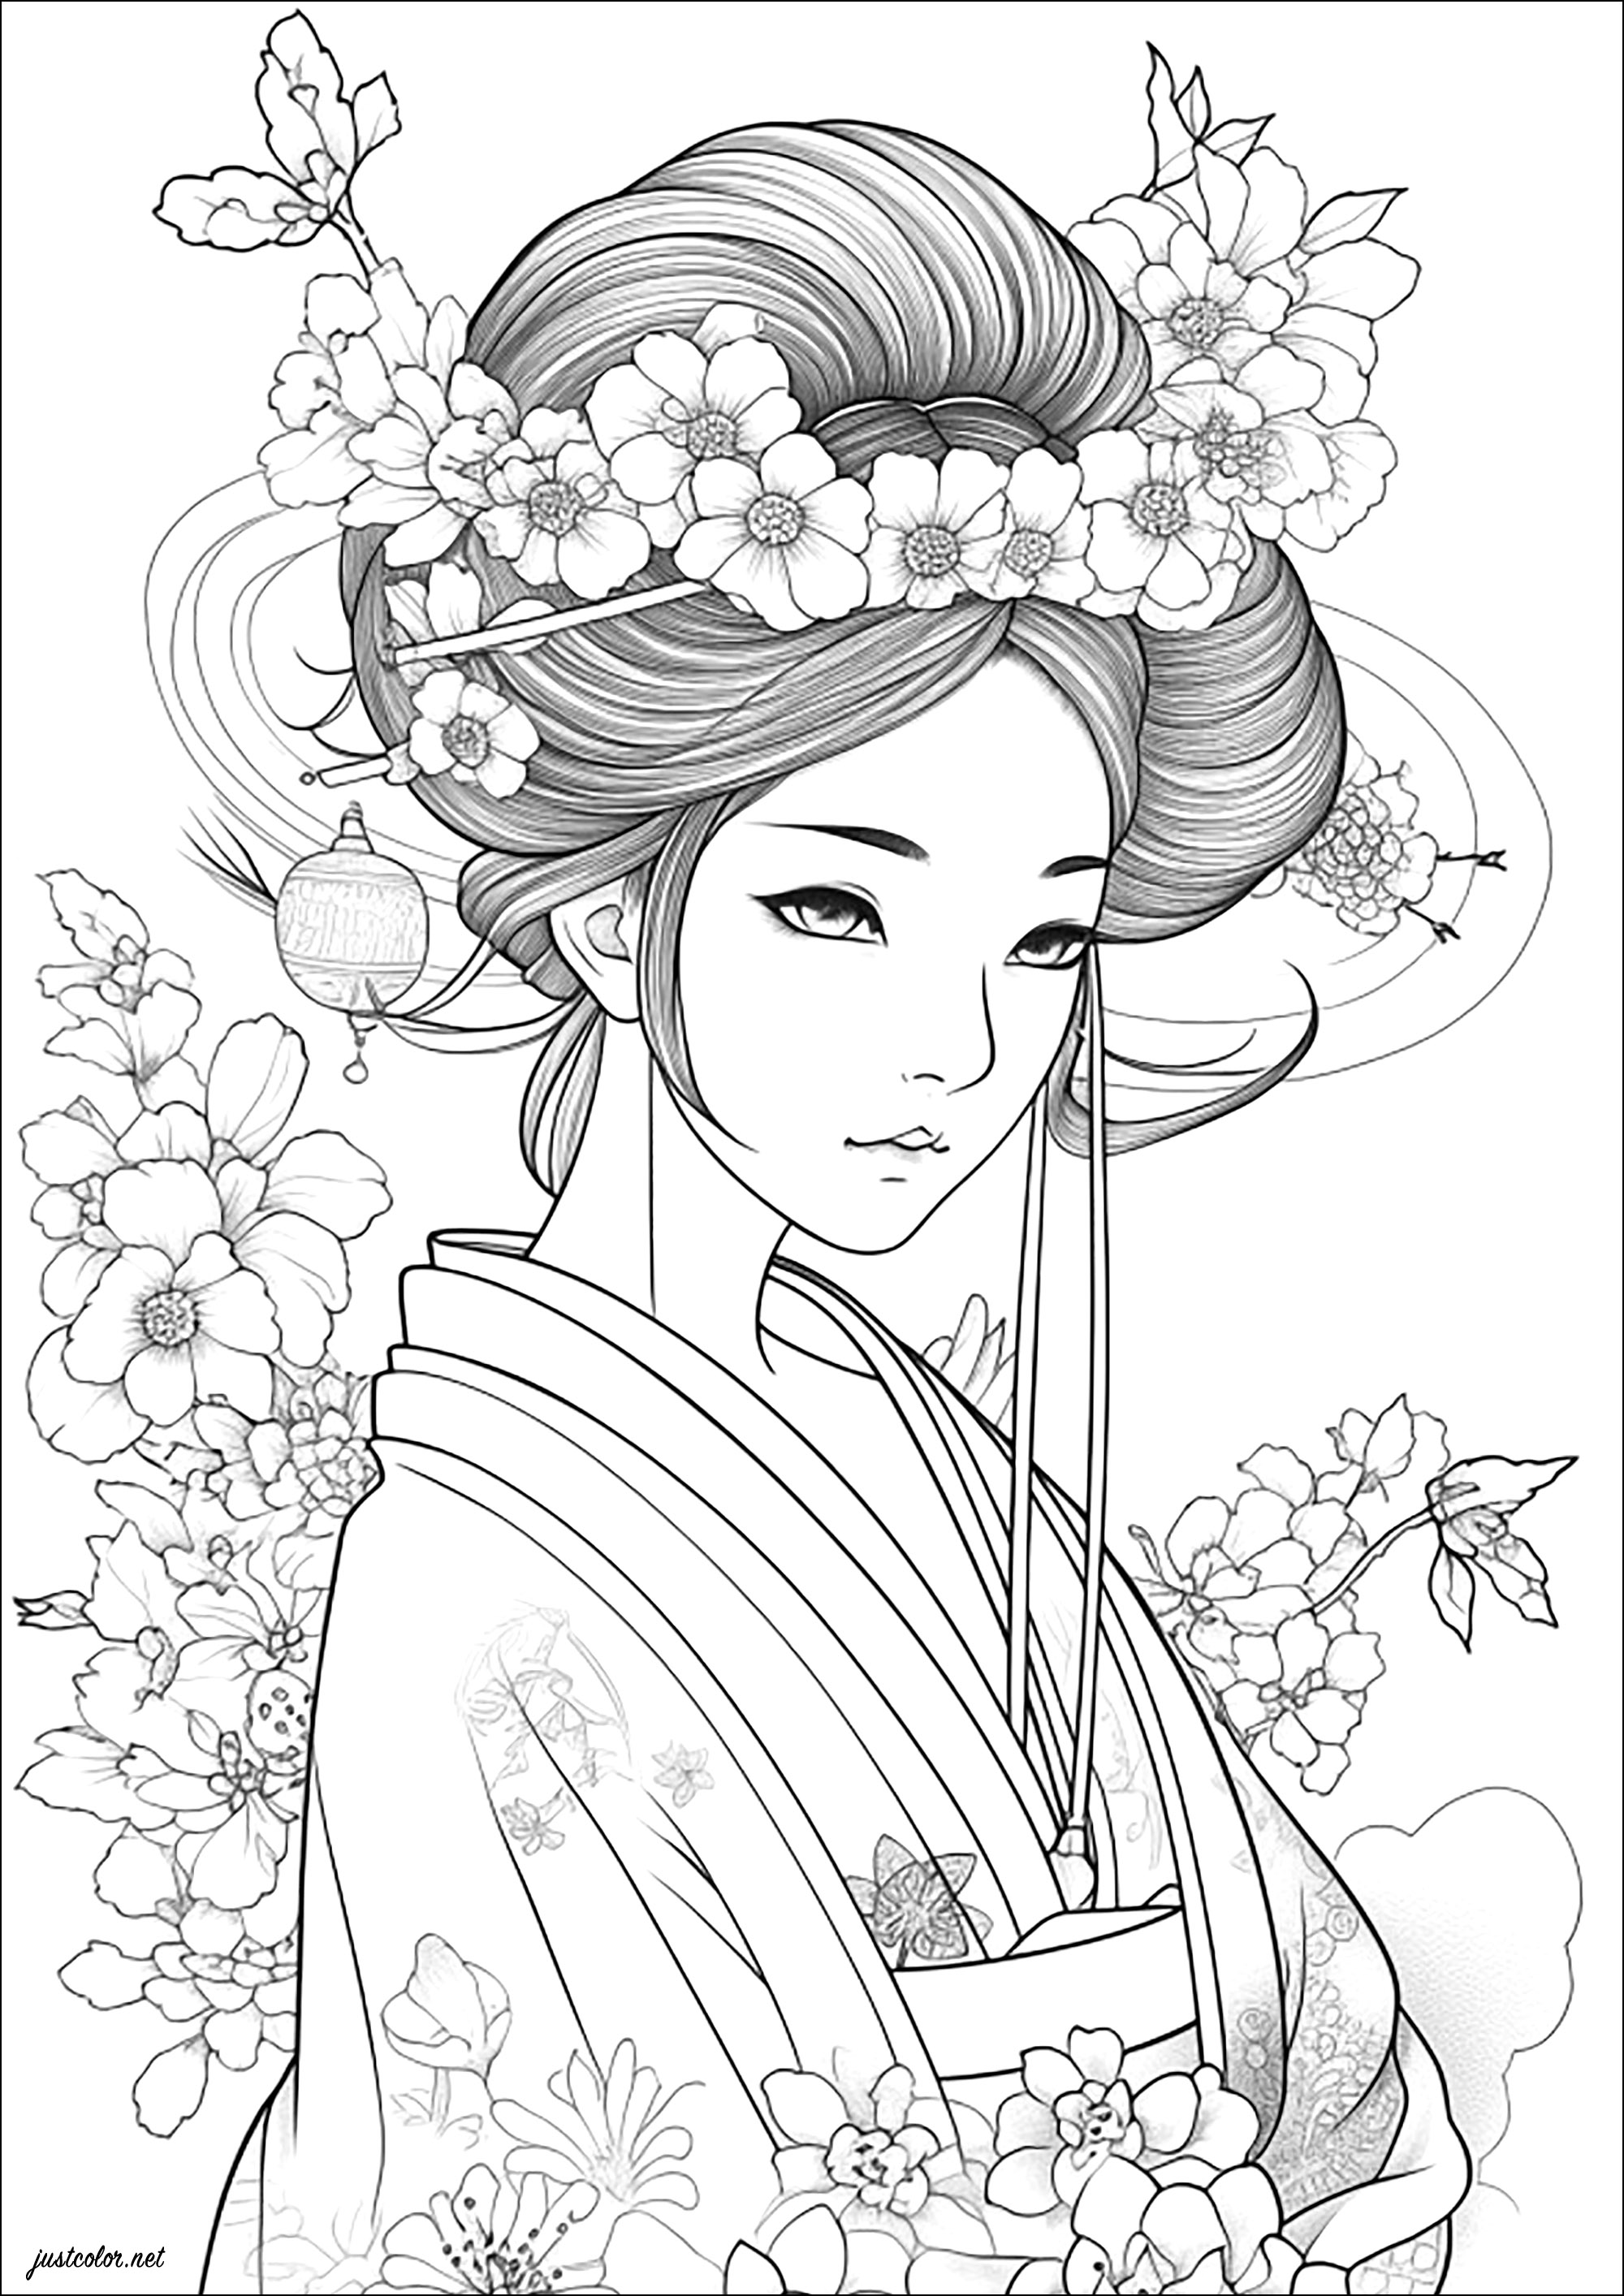 Geisha and flowers